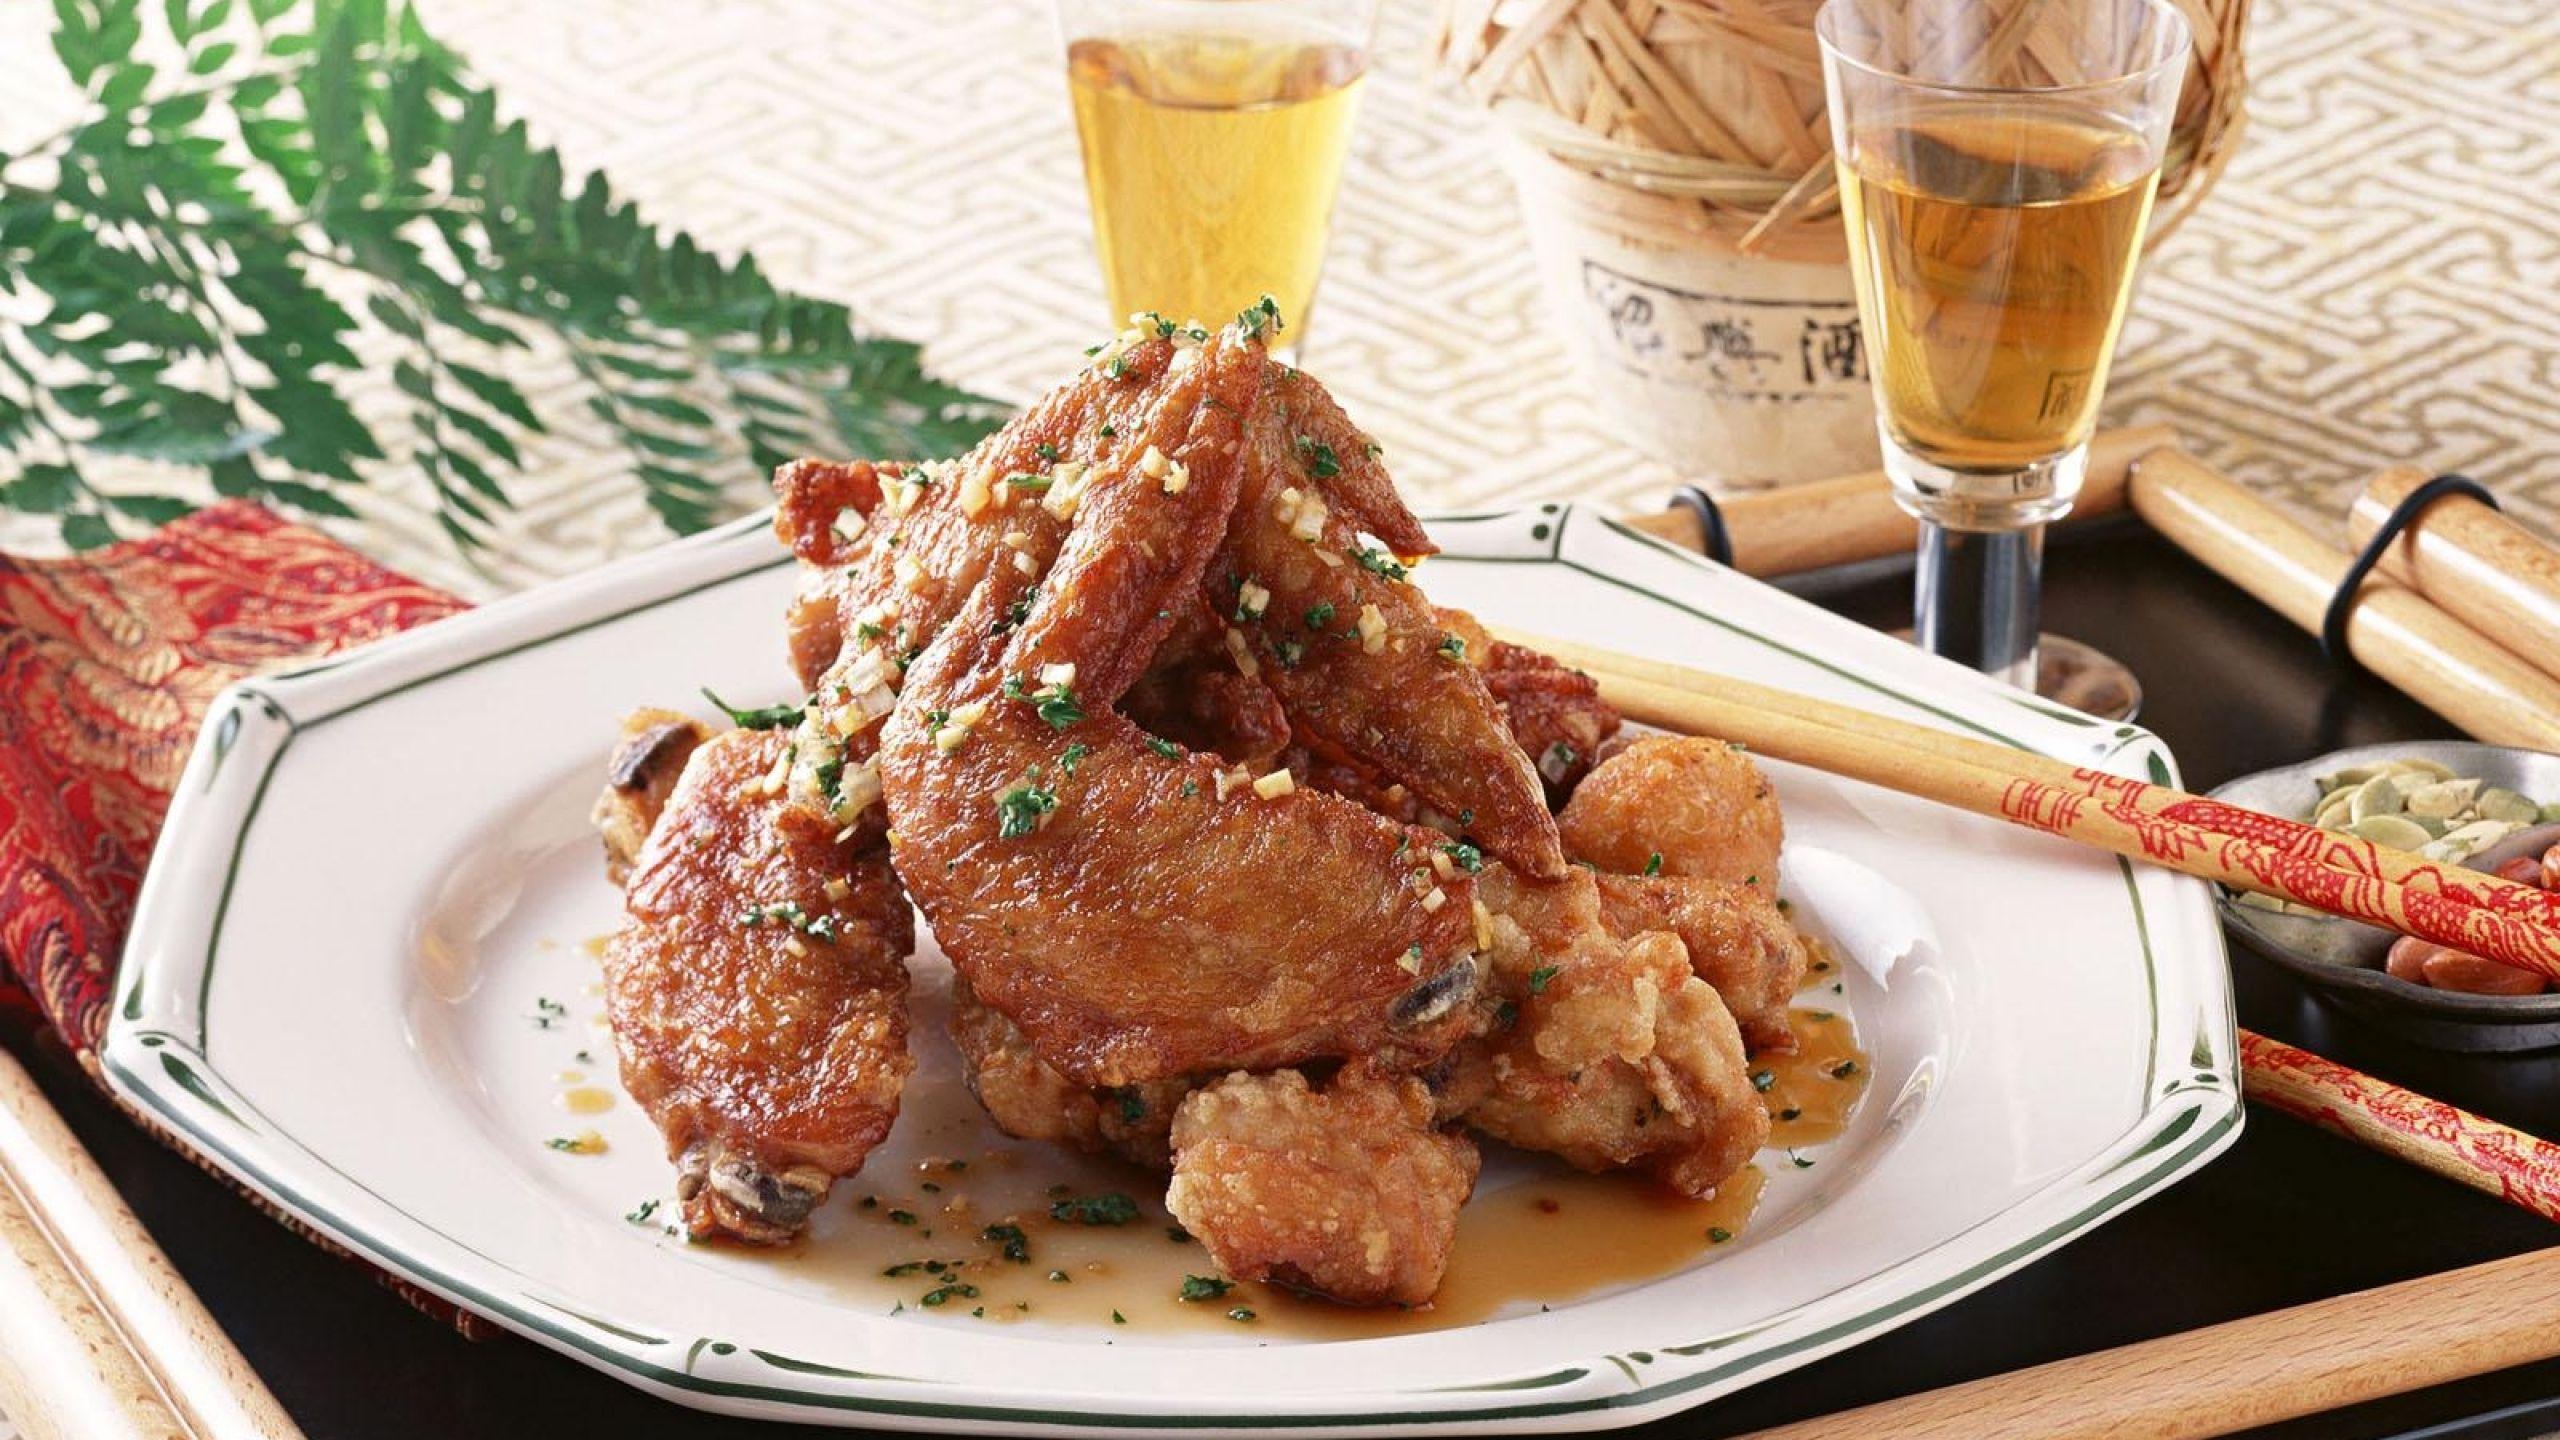 Download Wallpaper 2560x1440 Japanese cuisine, Chicken wings, Meat